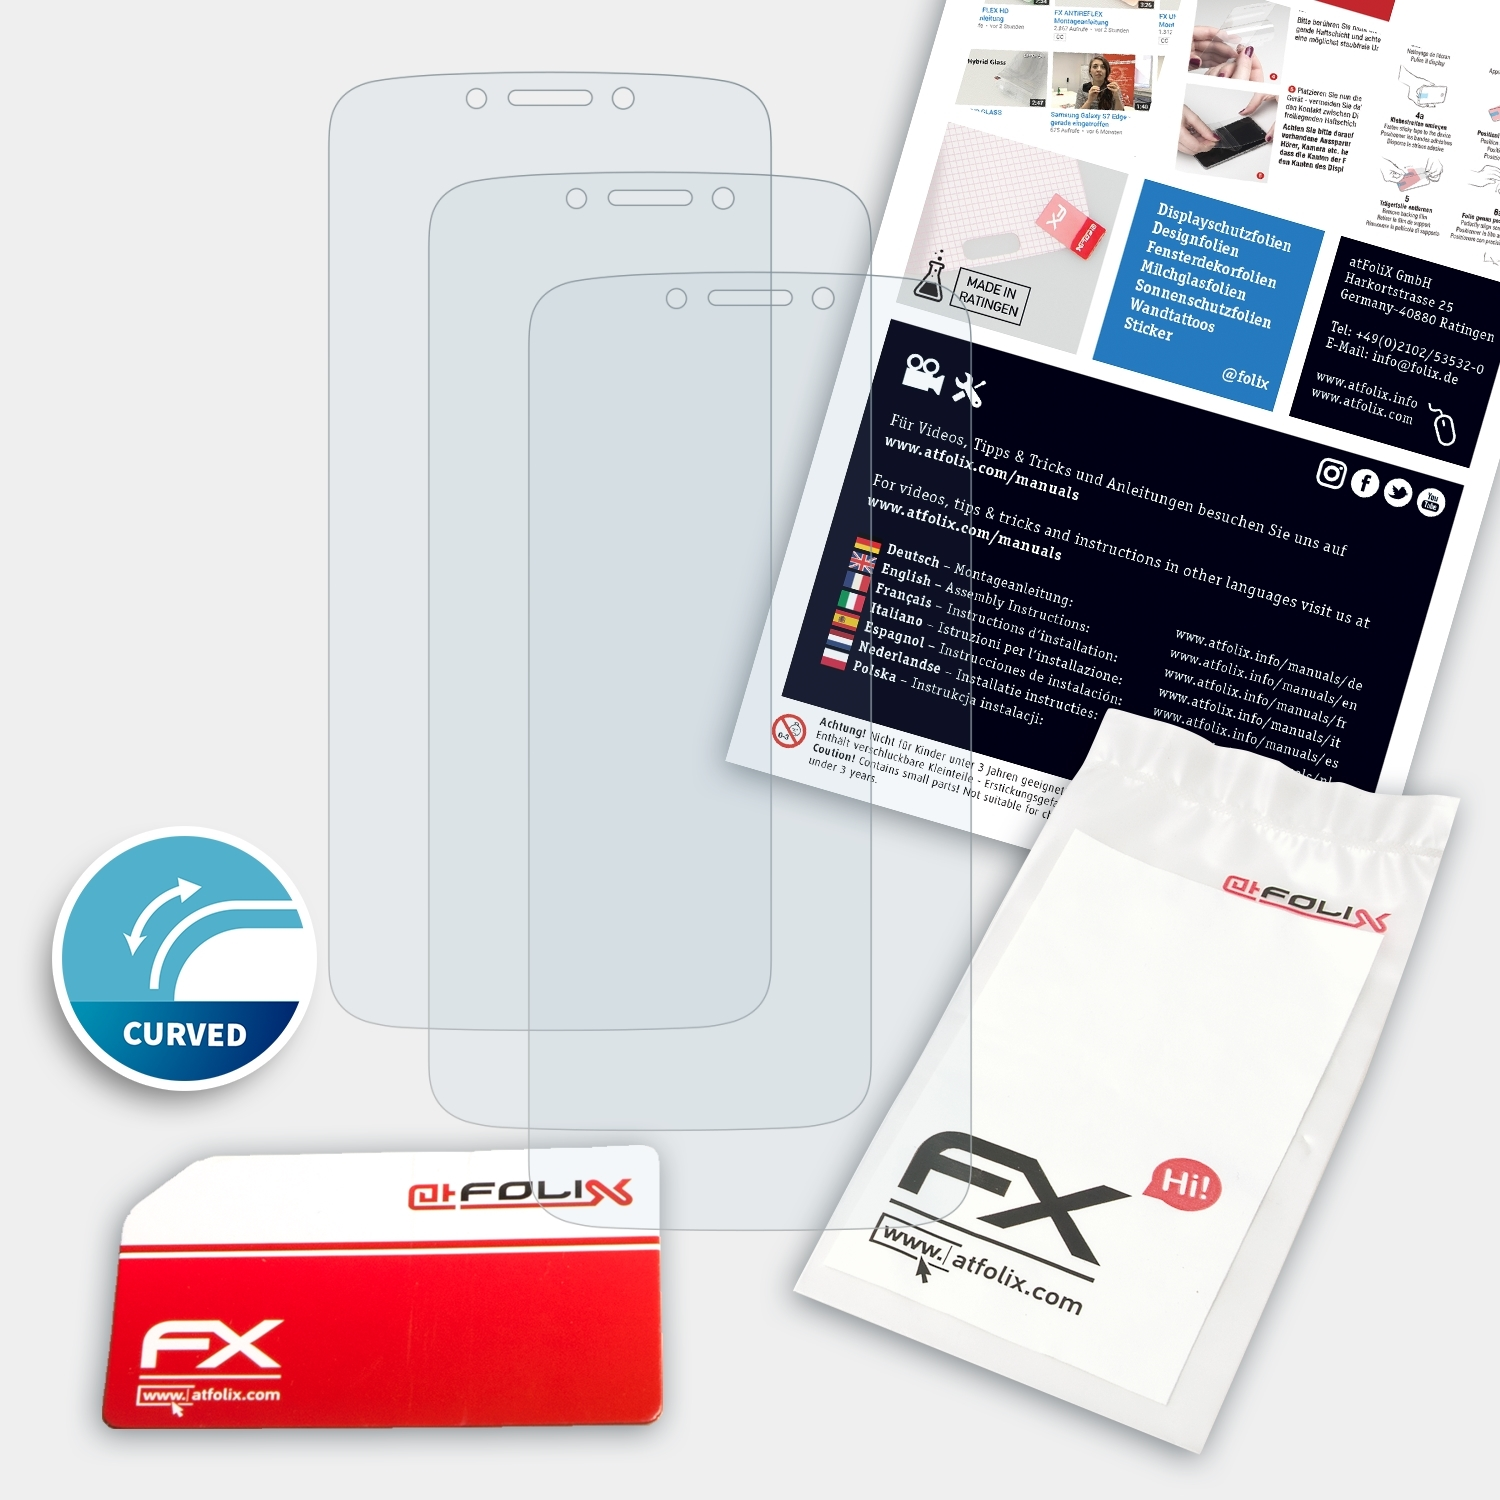 3x Motorola FX-ActiFleX ATFOLIX Lenovo Displayschutz(für E5) Moto